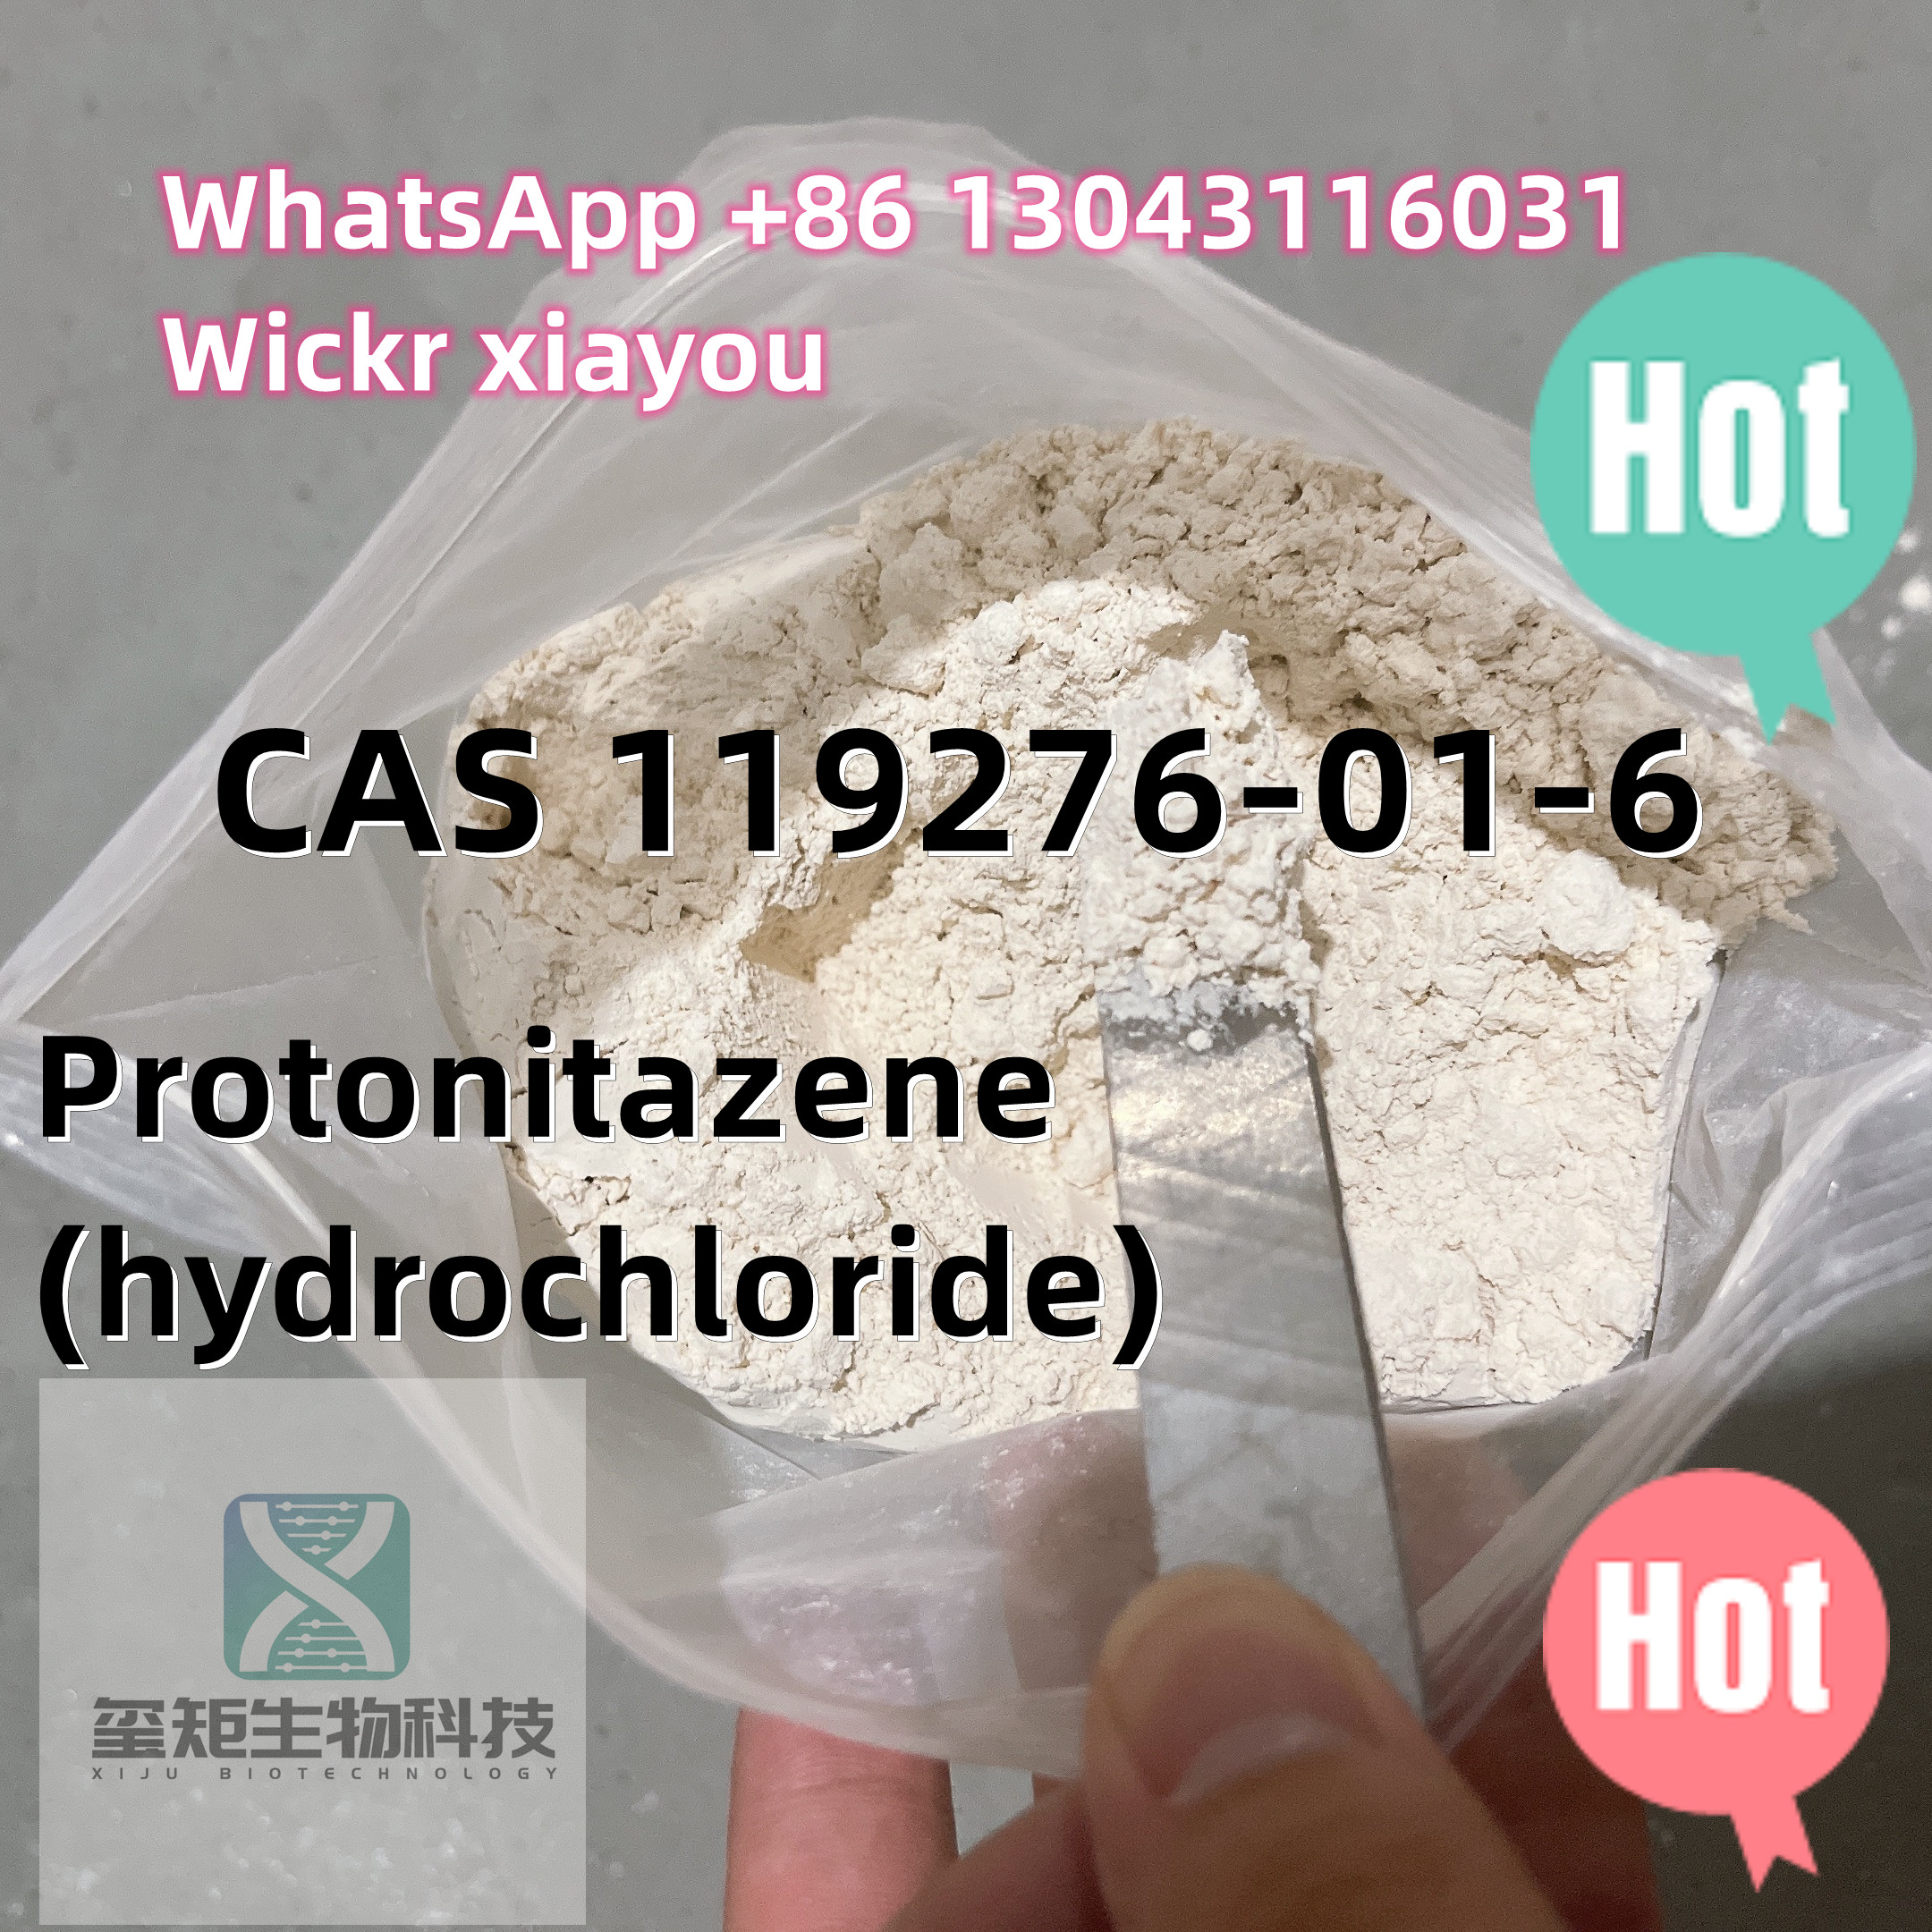 Umgangatho ophezulu 99% Purity powder Protonitazene-hydrochloride CAS 119276-01-6 ,Threema: 9JPV7VEE,Wickr ME:xiayou